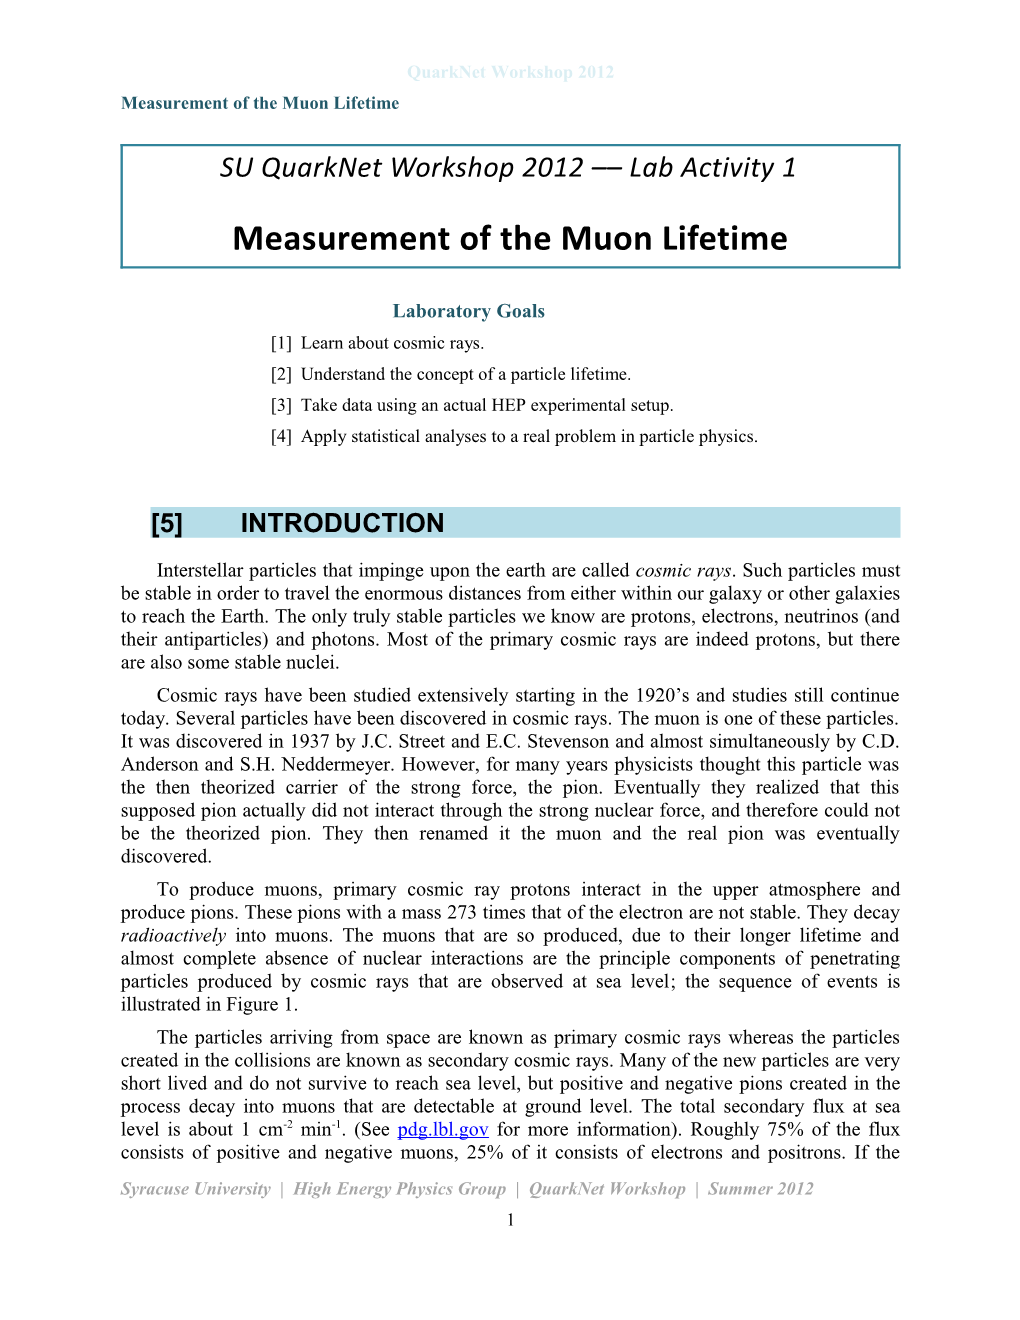 Measurement of the Muon Lifetime